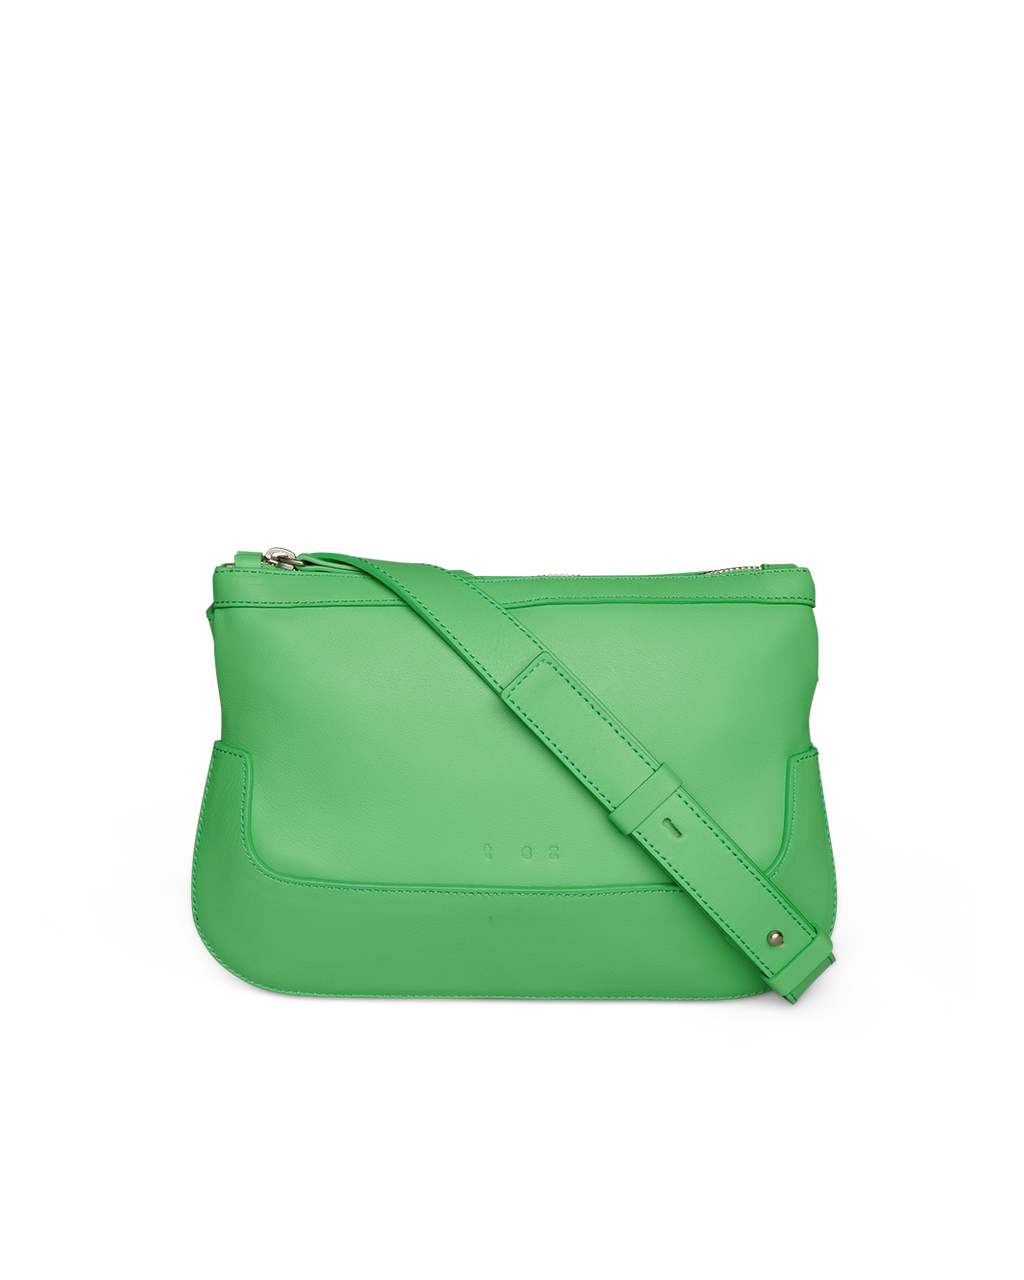 Apple Green Leather Tassel Cross Body Bag